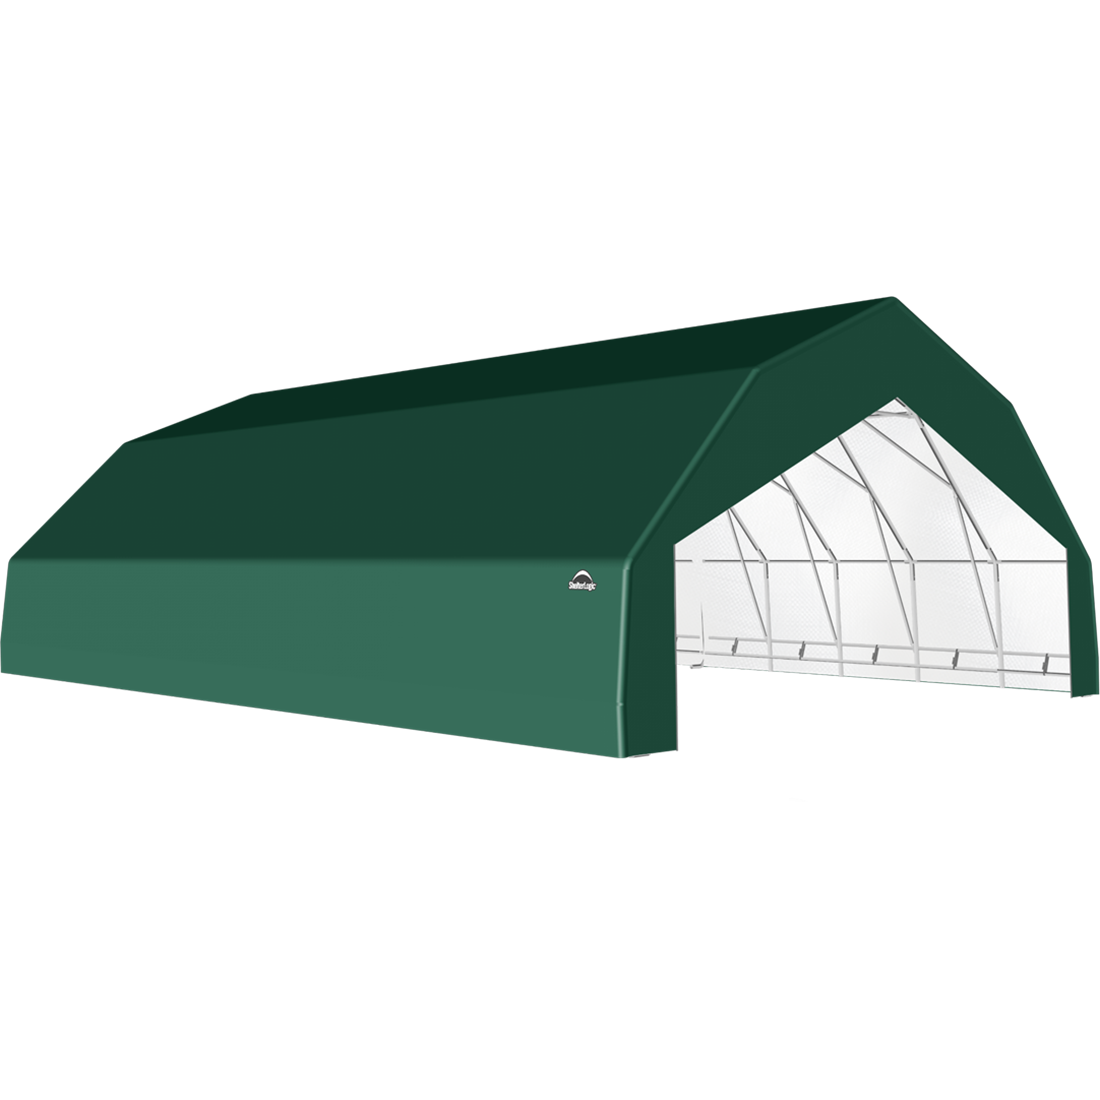 ShelterTech SP Series Barn Shelter, 30 ft. x 48 ft. x 15 ft. Heavy Duty PVC 14.5 oz. Green